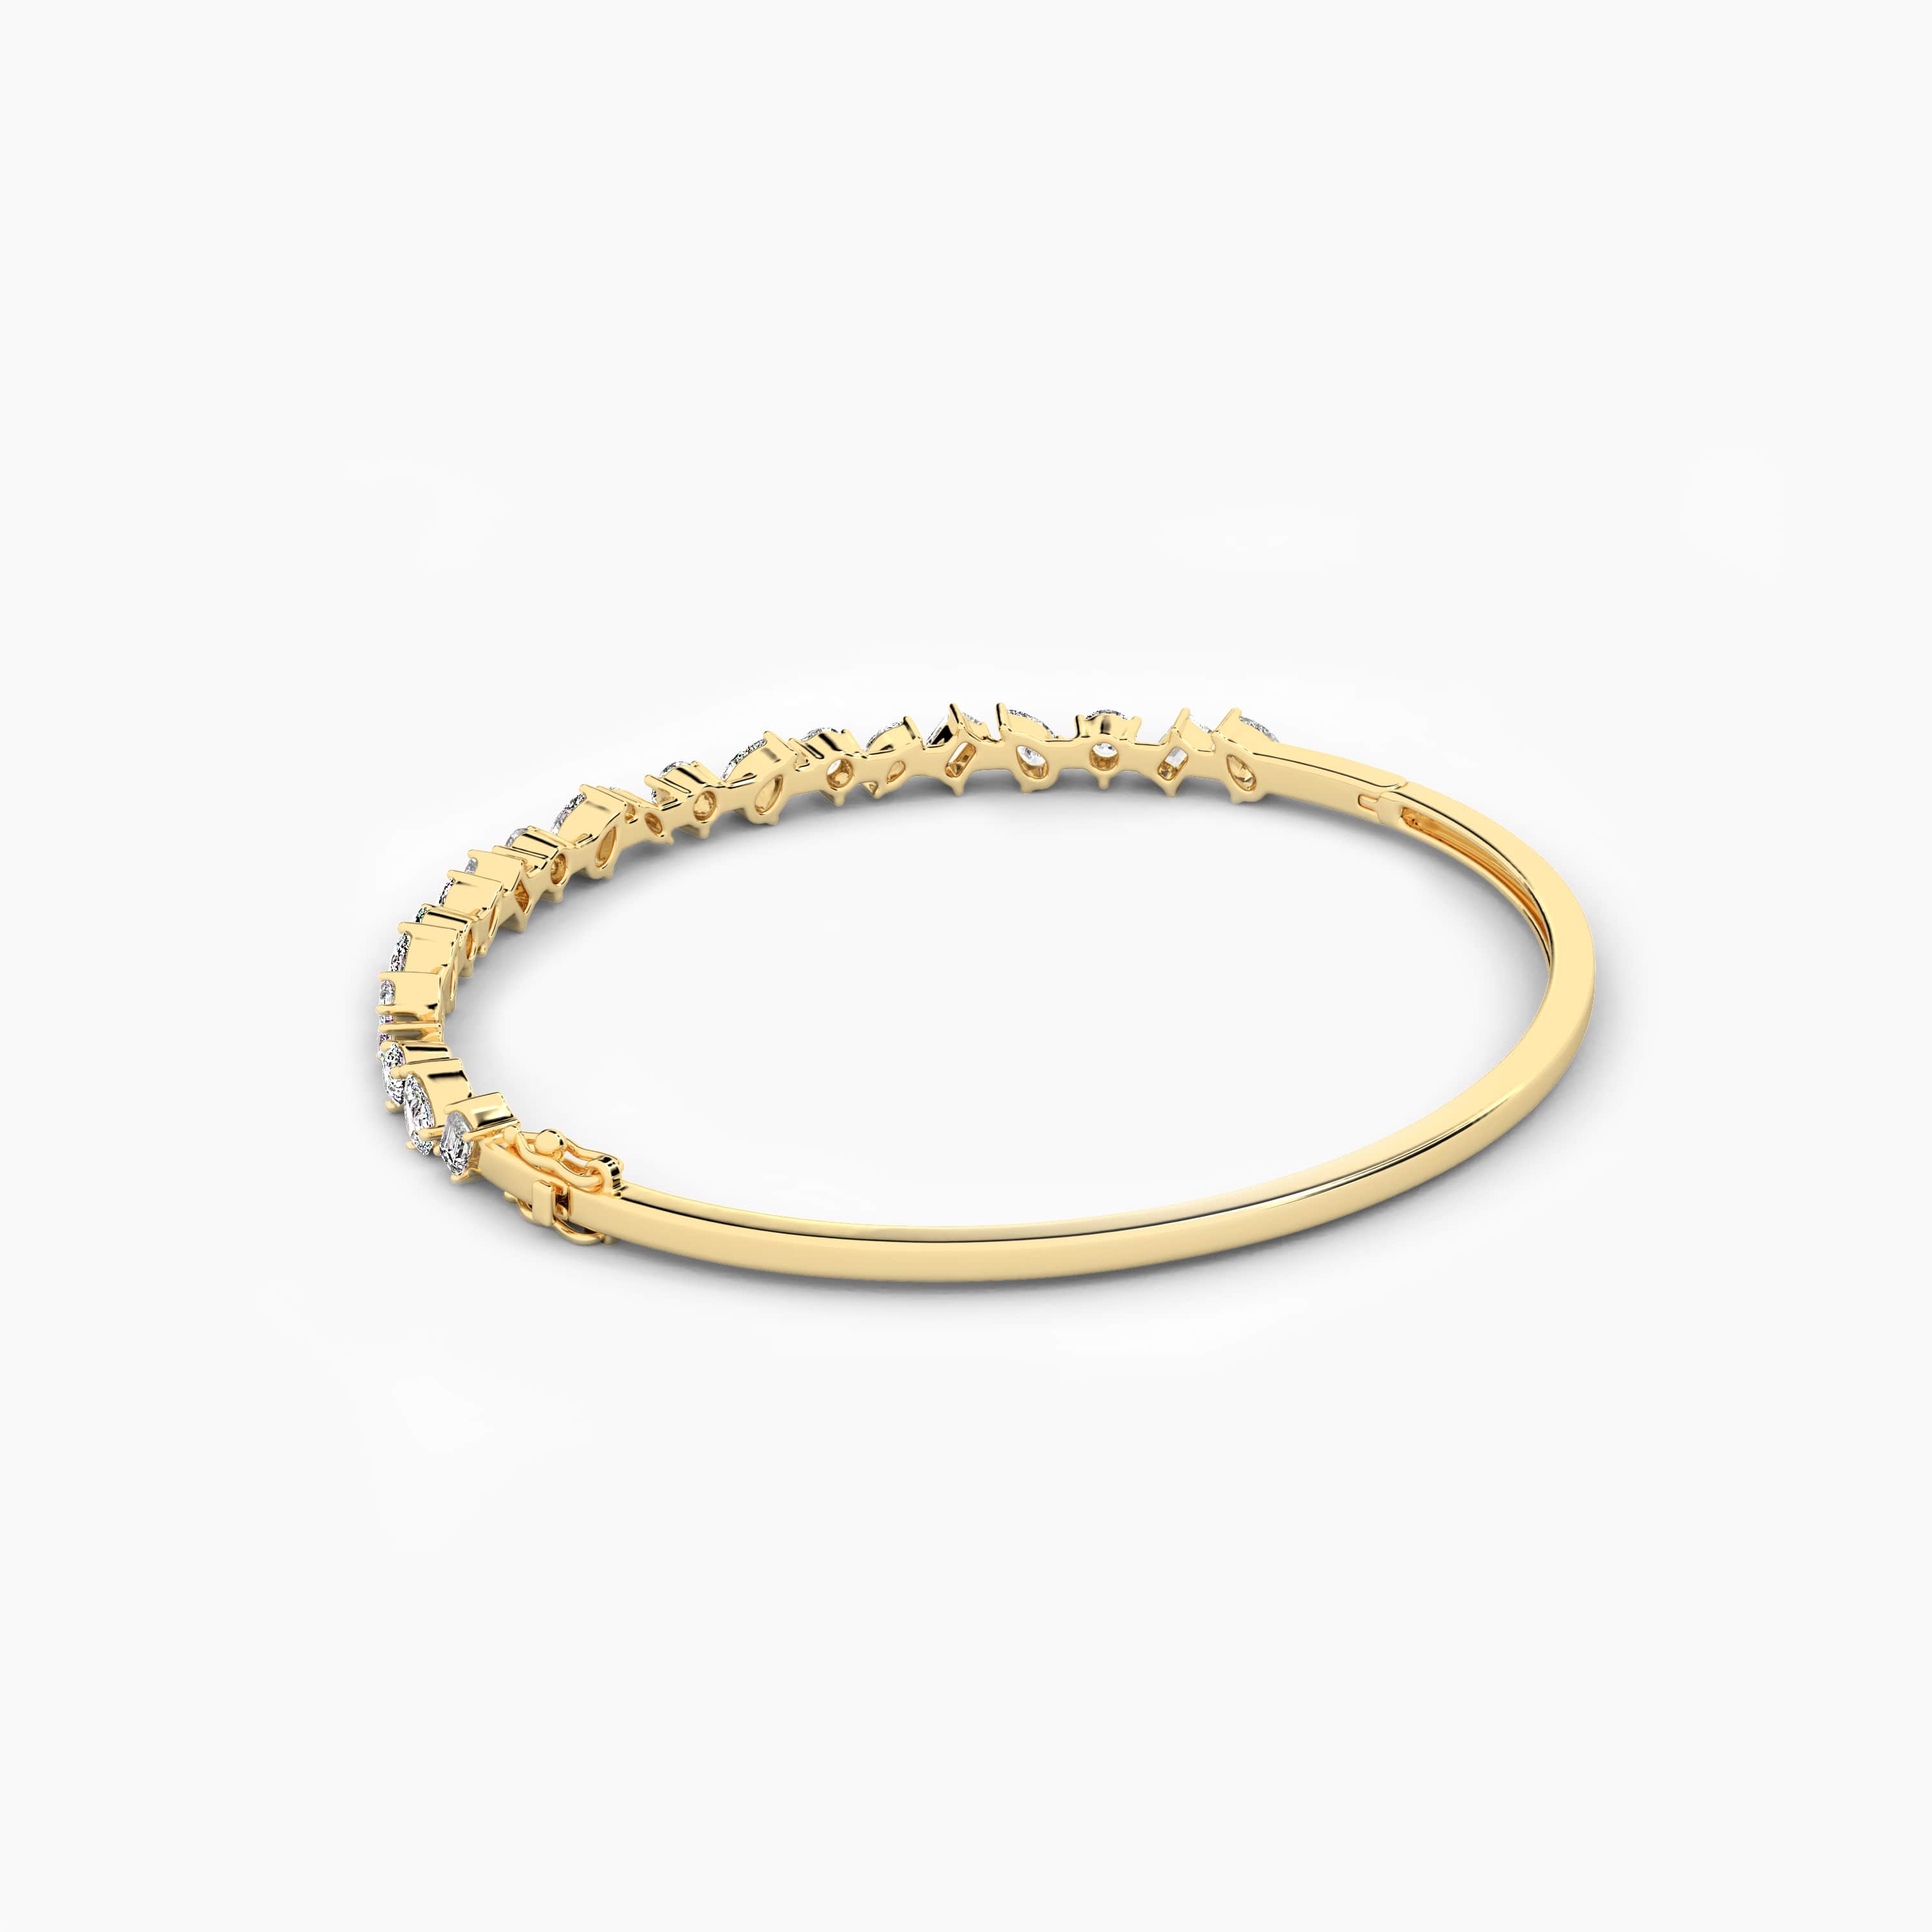 gold and diamond bangle bracelet